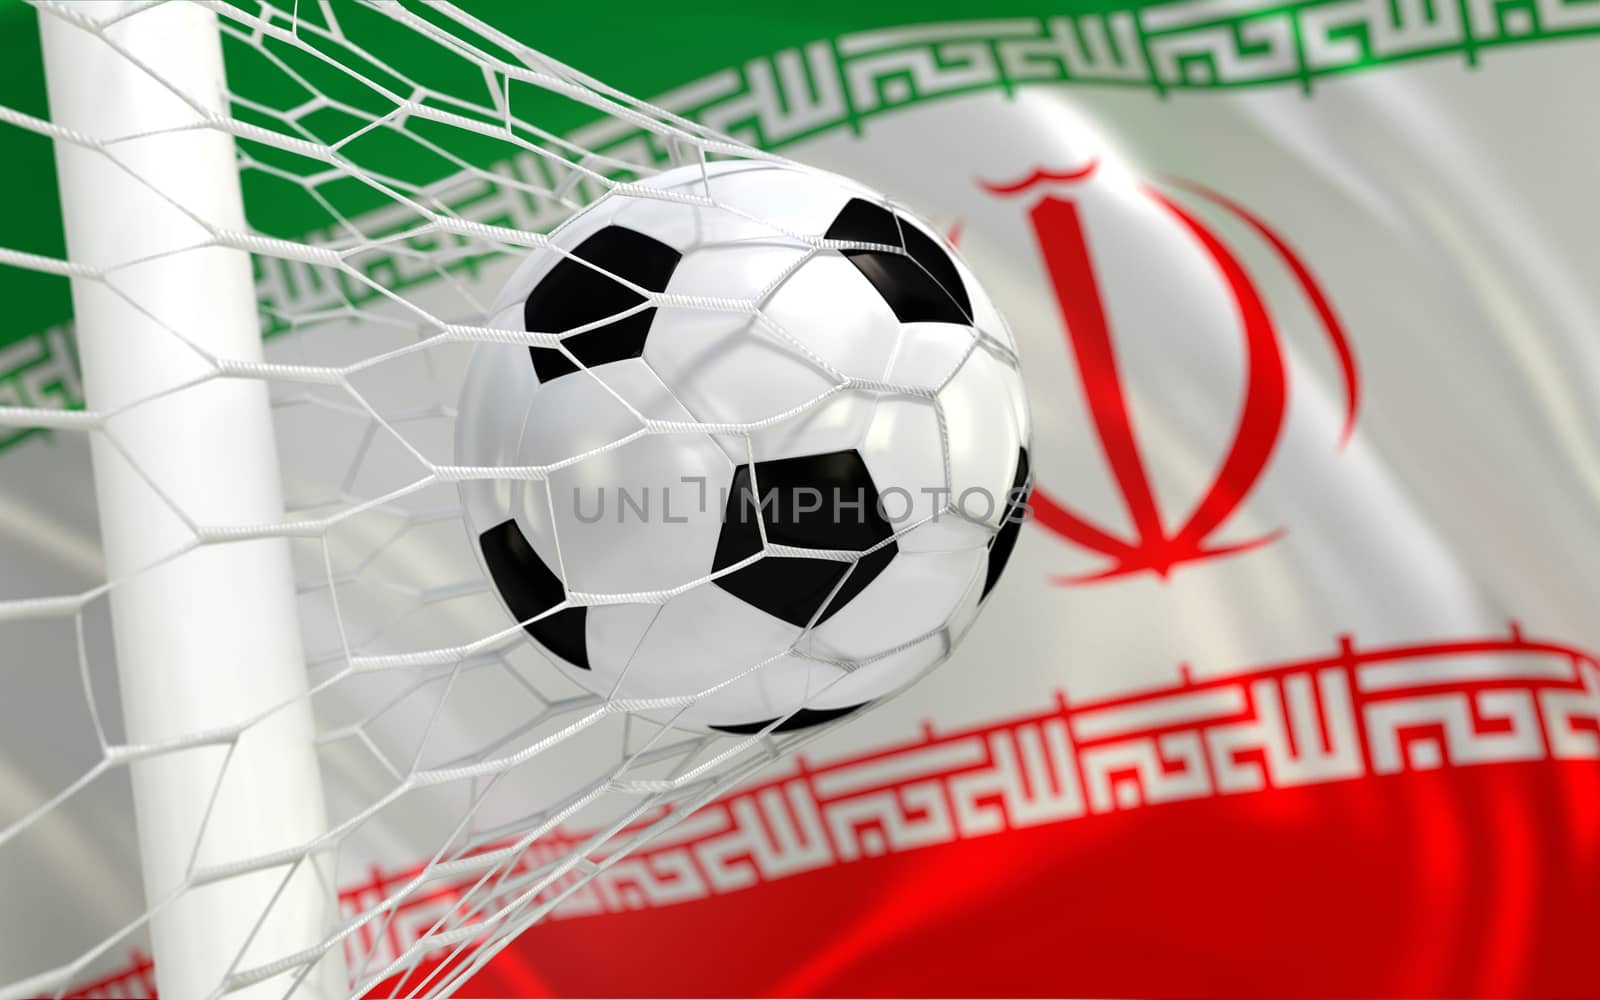 Iran flag and soccer ball, football in goal net